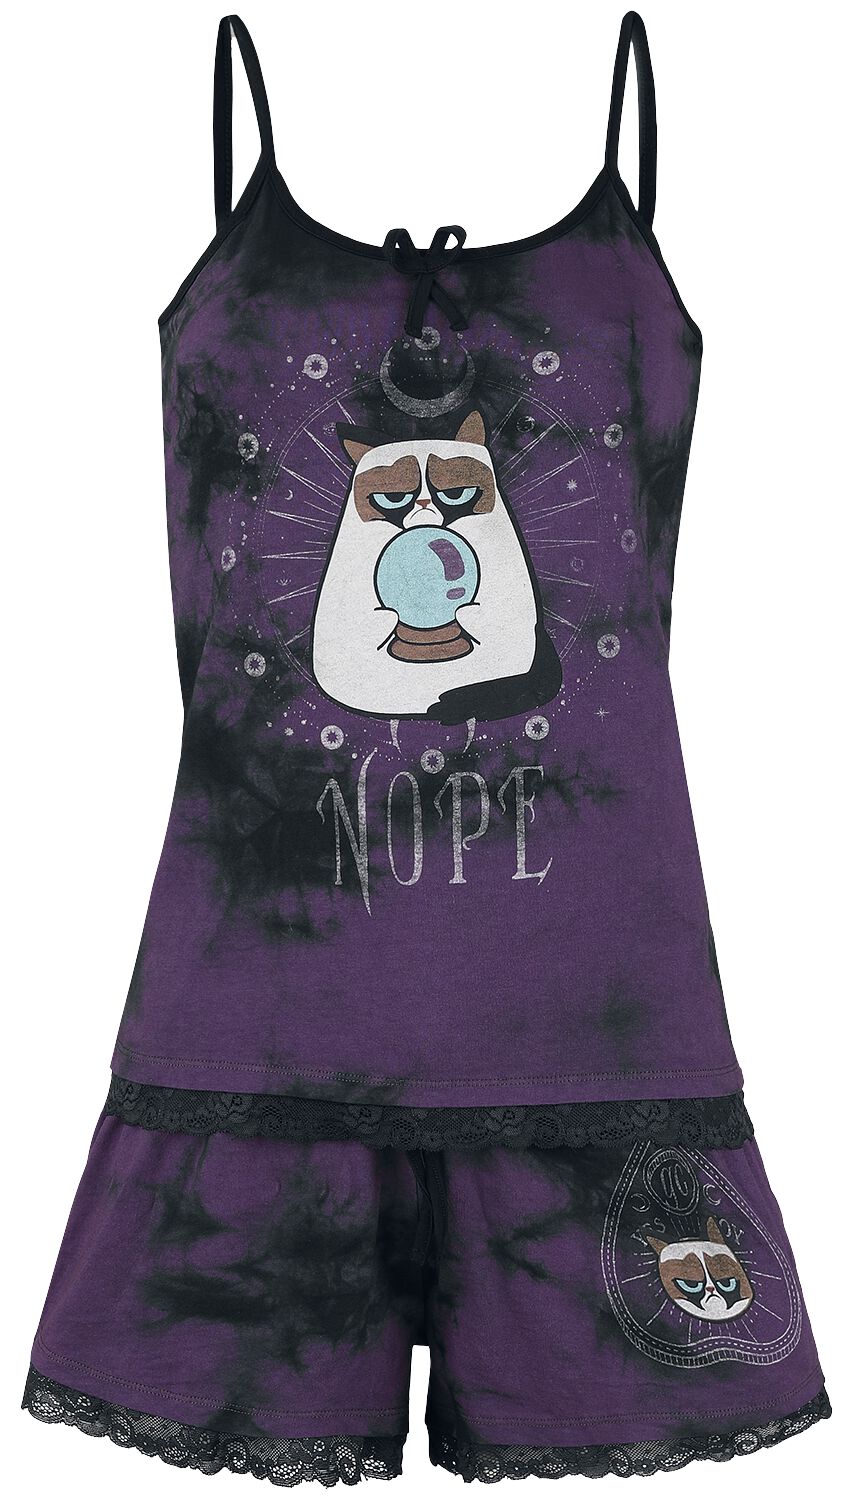 Grumpy Cat Nope Pyjama purple black